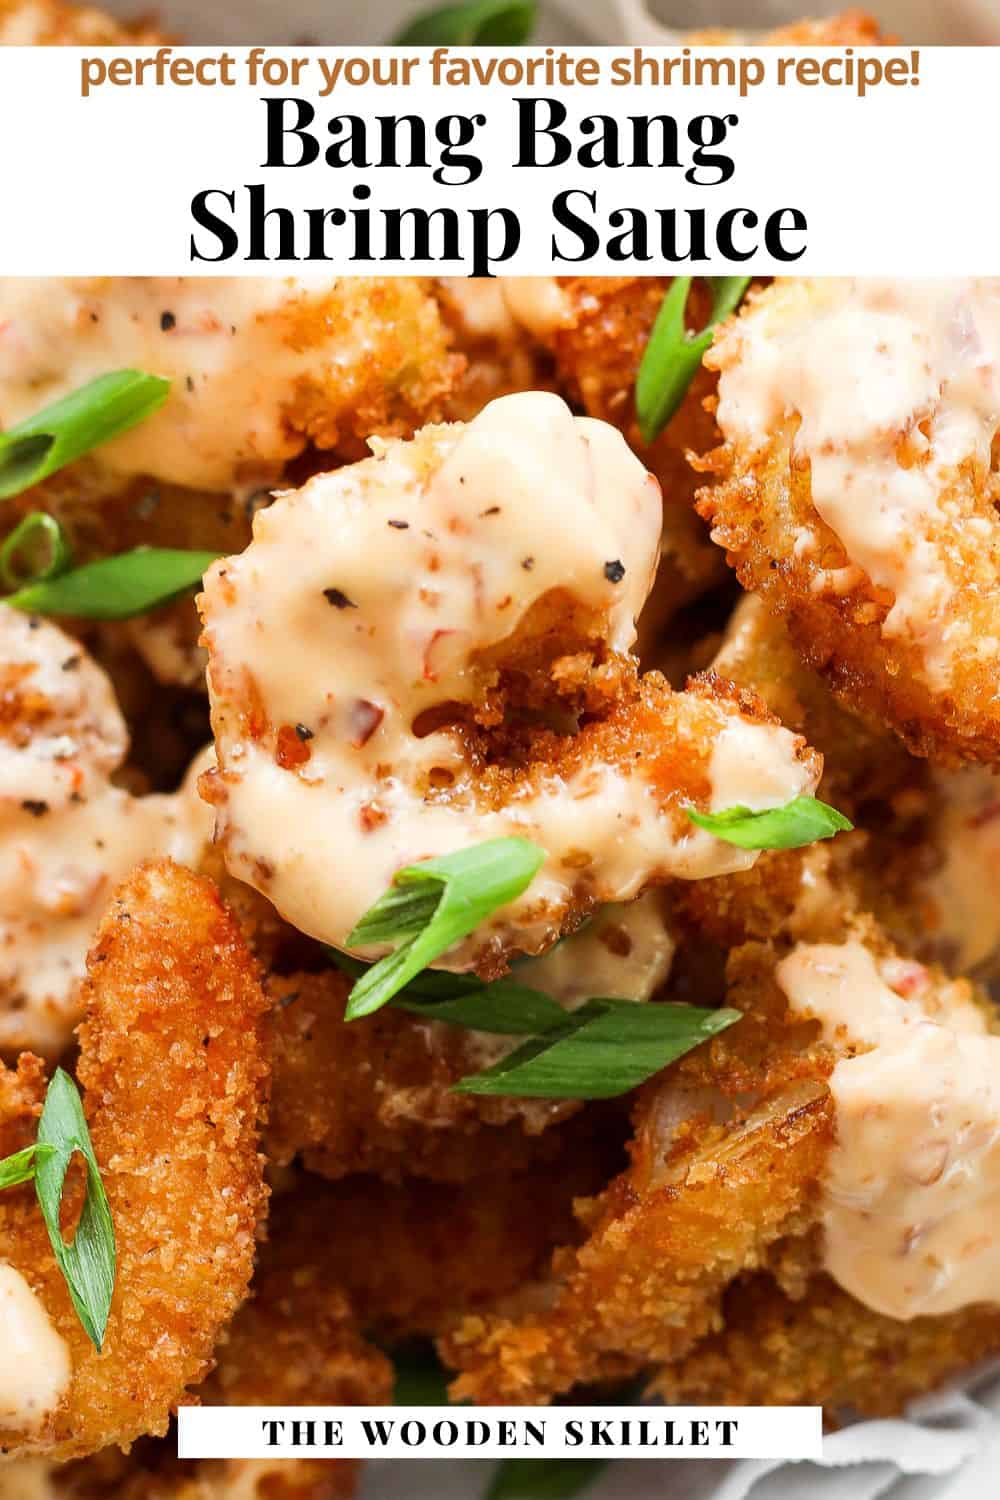 Pinterest image showing bang bang shrimp and sauce with the title "bang bang shrimp sauce. perfect for your favorite shrimp recipe!